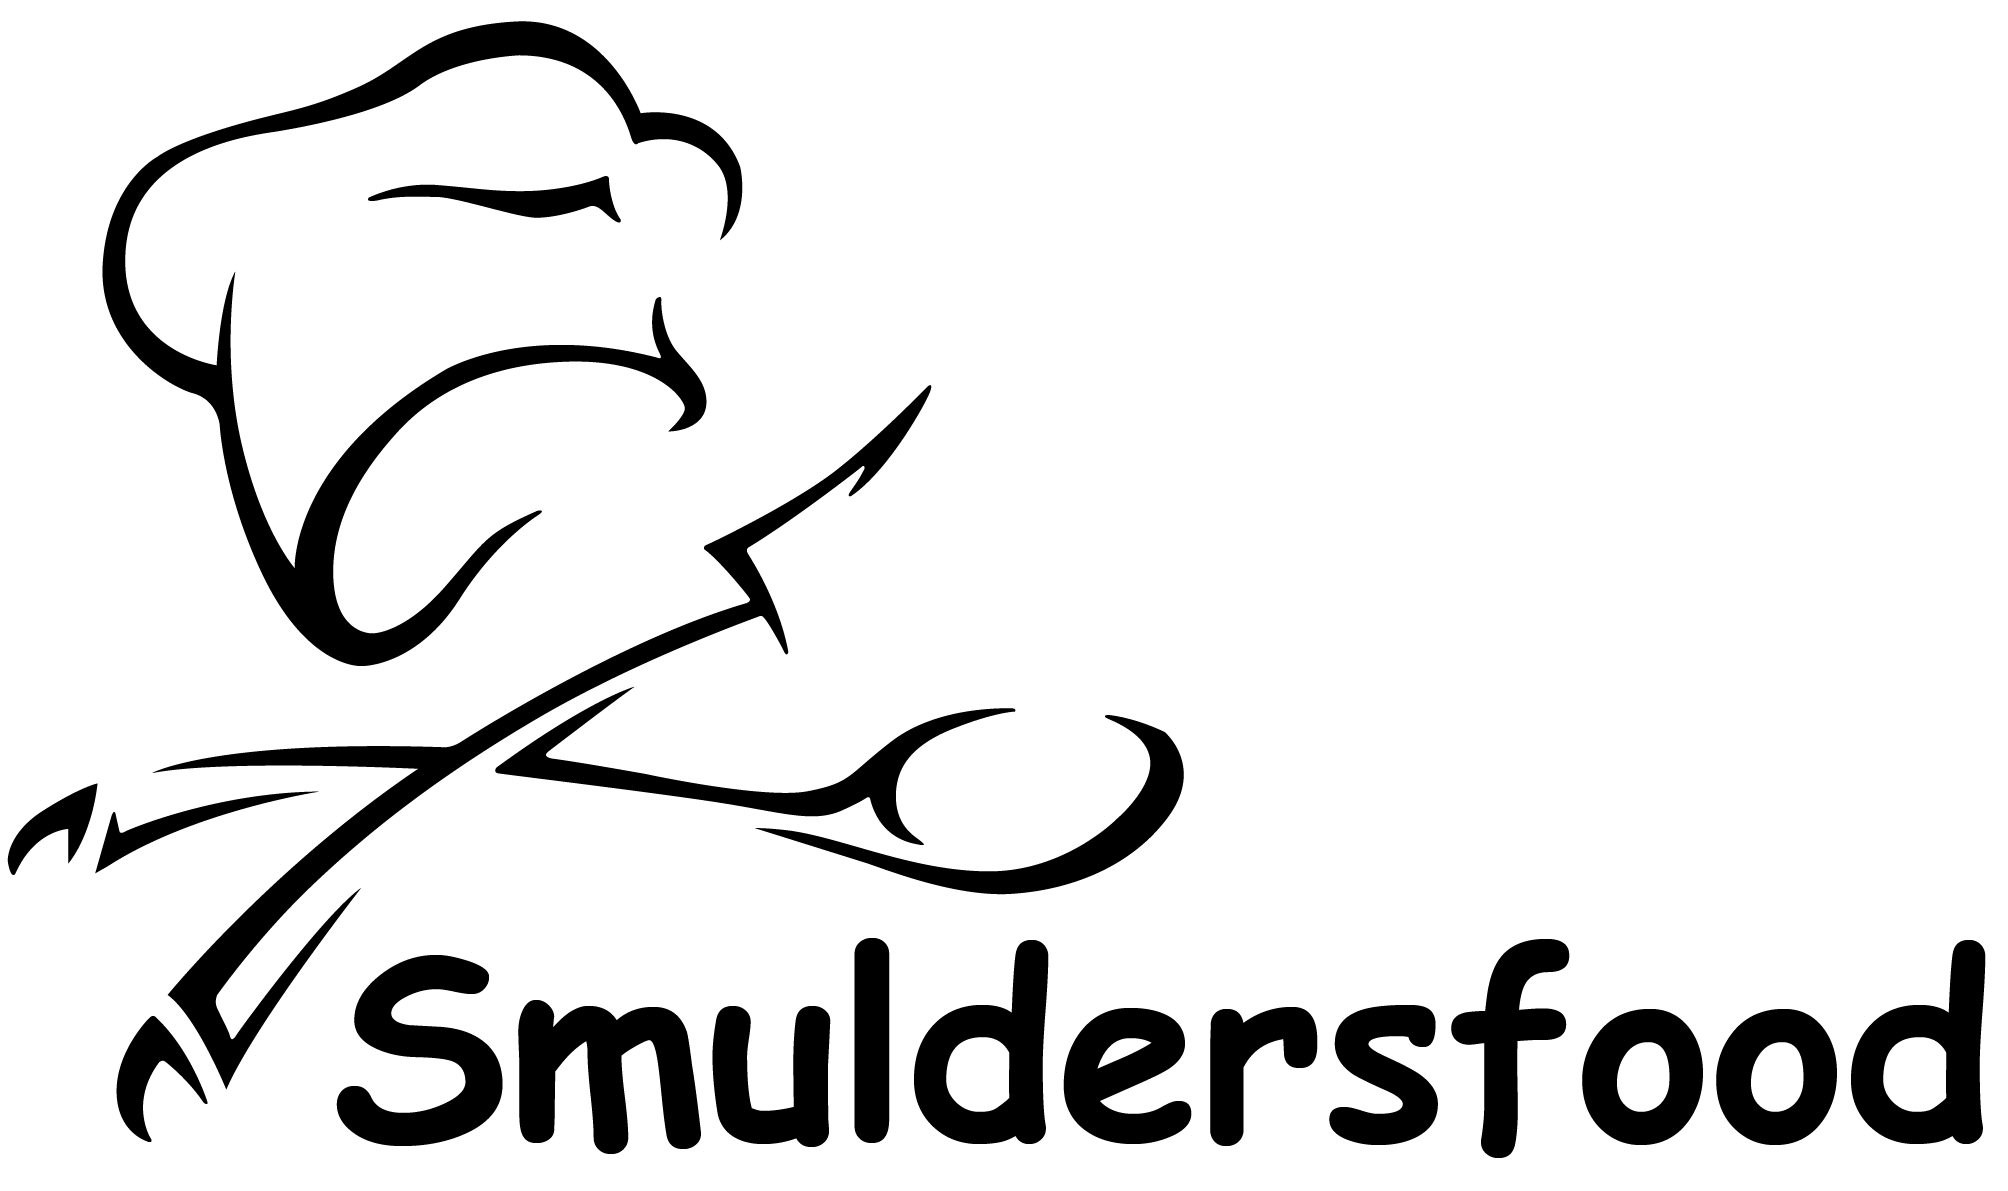 Smuldersfood-logo-03